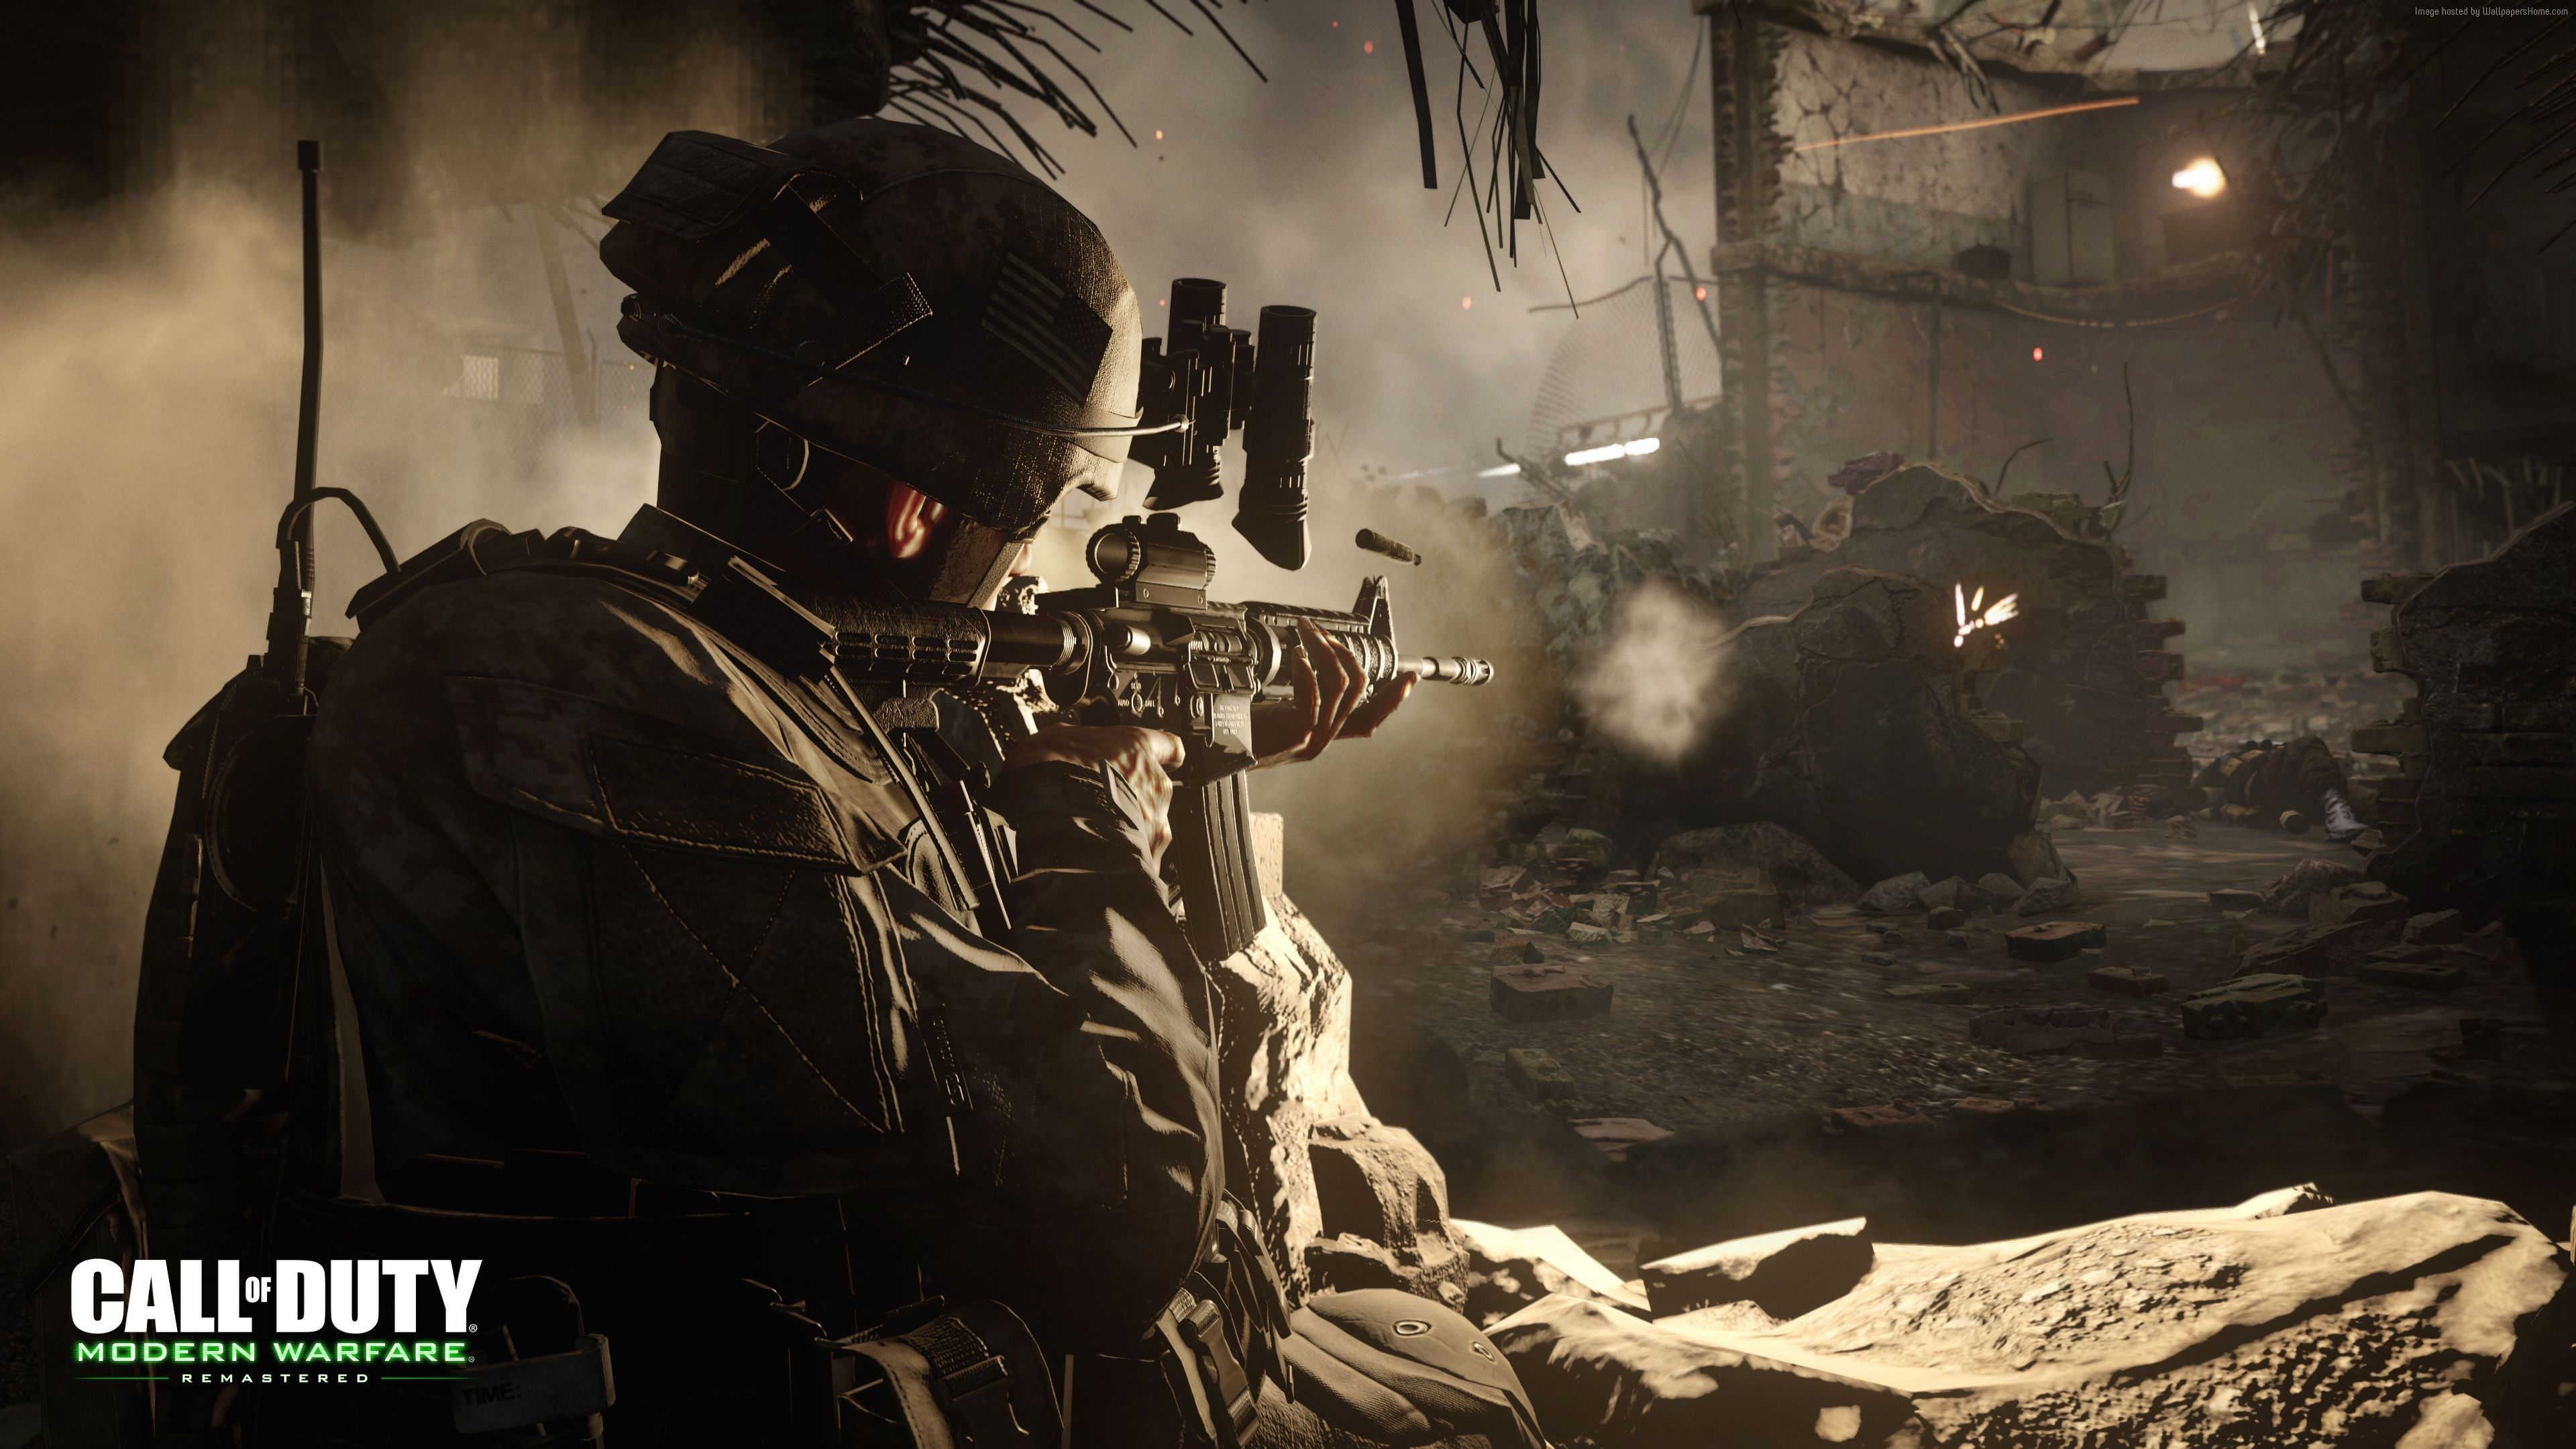 Fondos de pantalla de Call of Duty - FondosMil